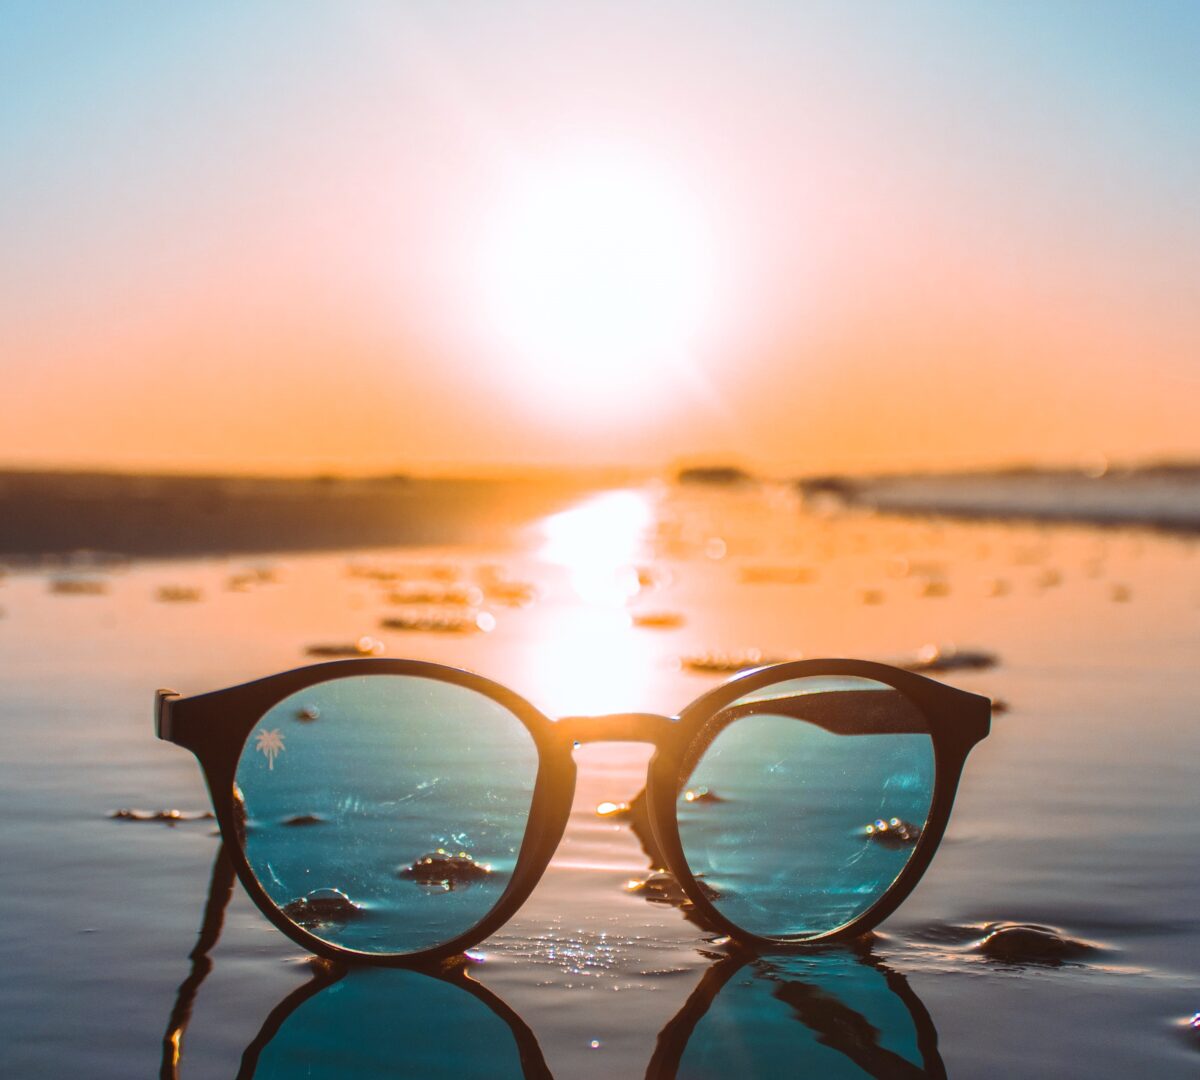 Sunset and sunglasses